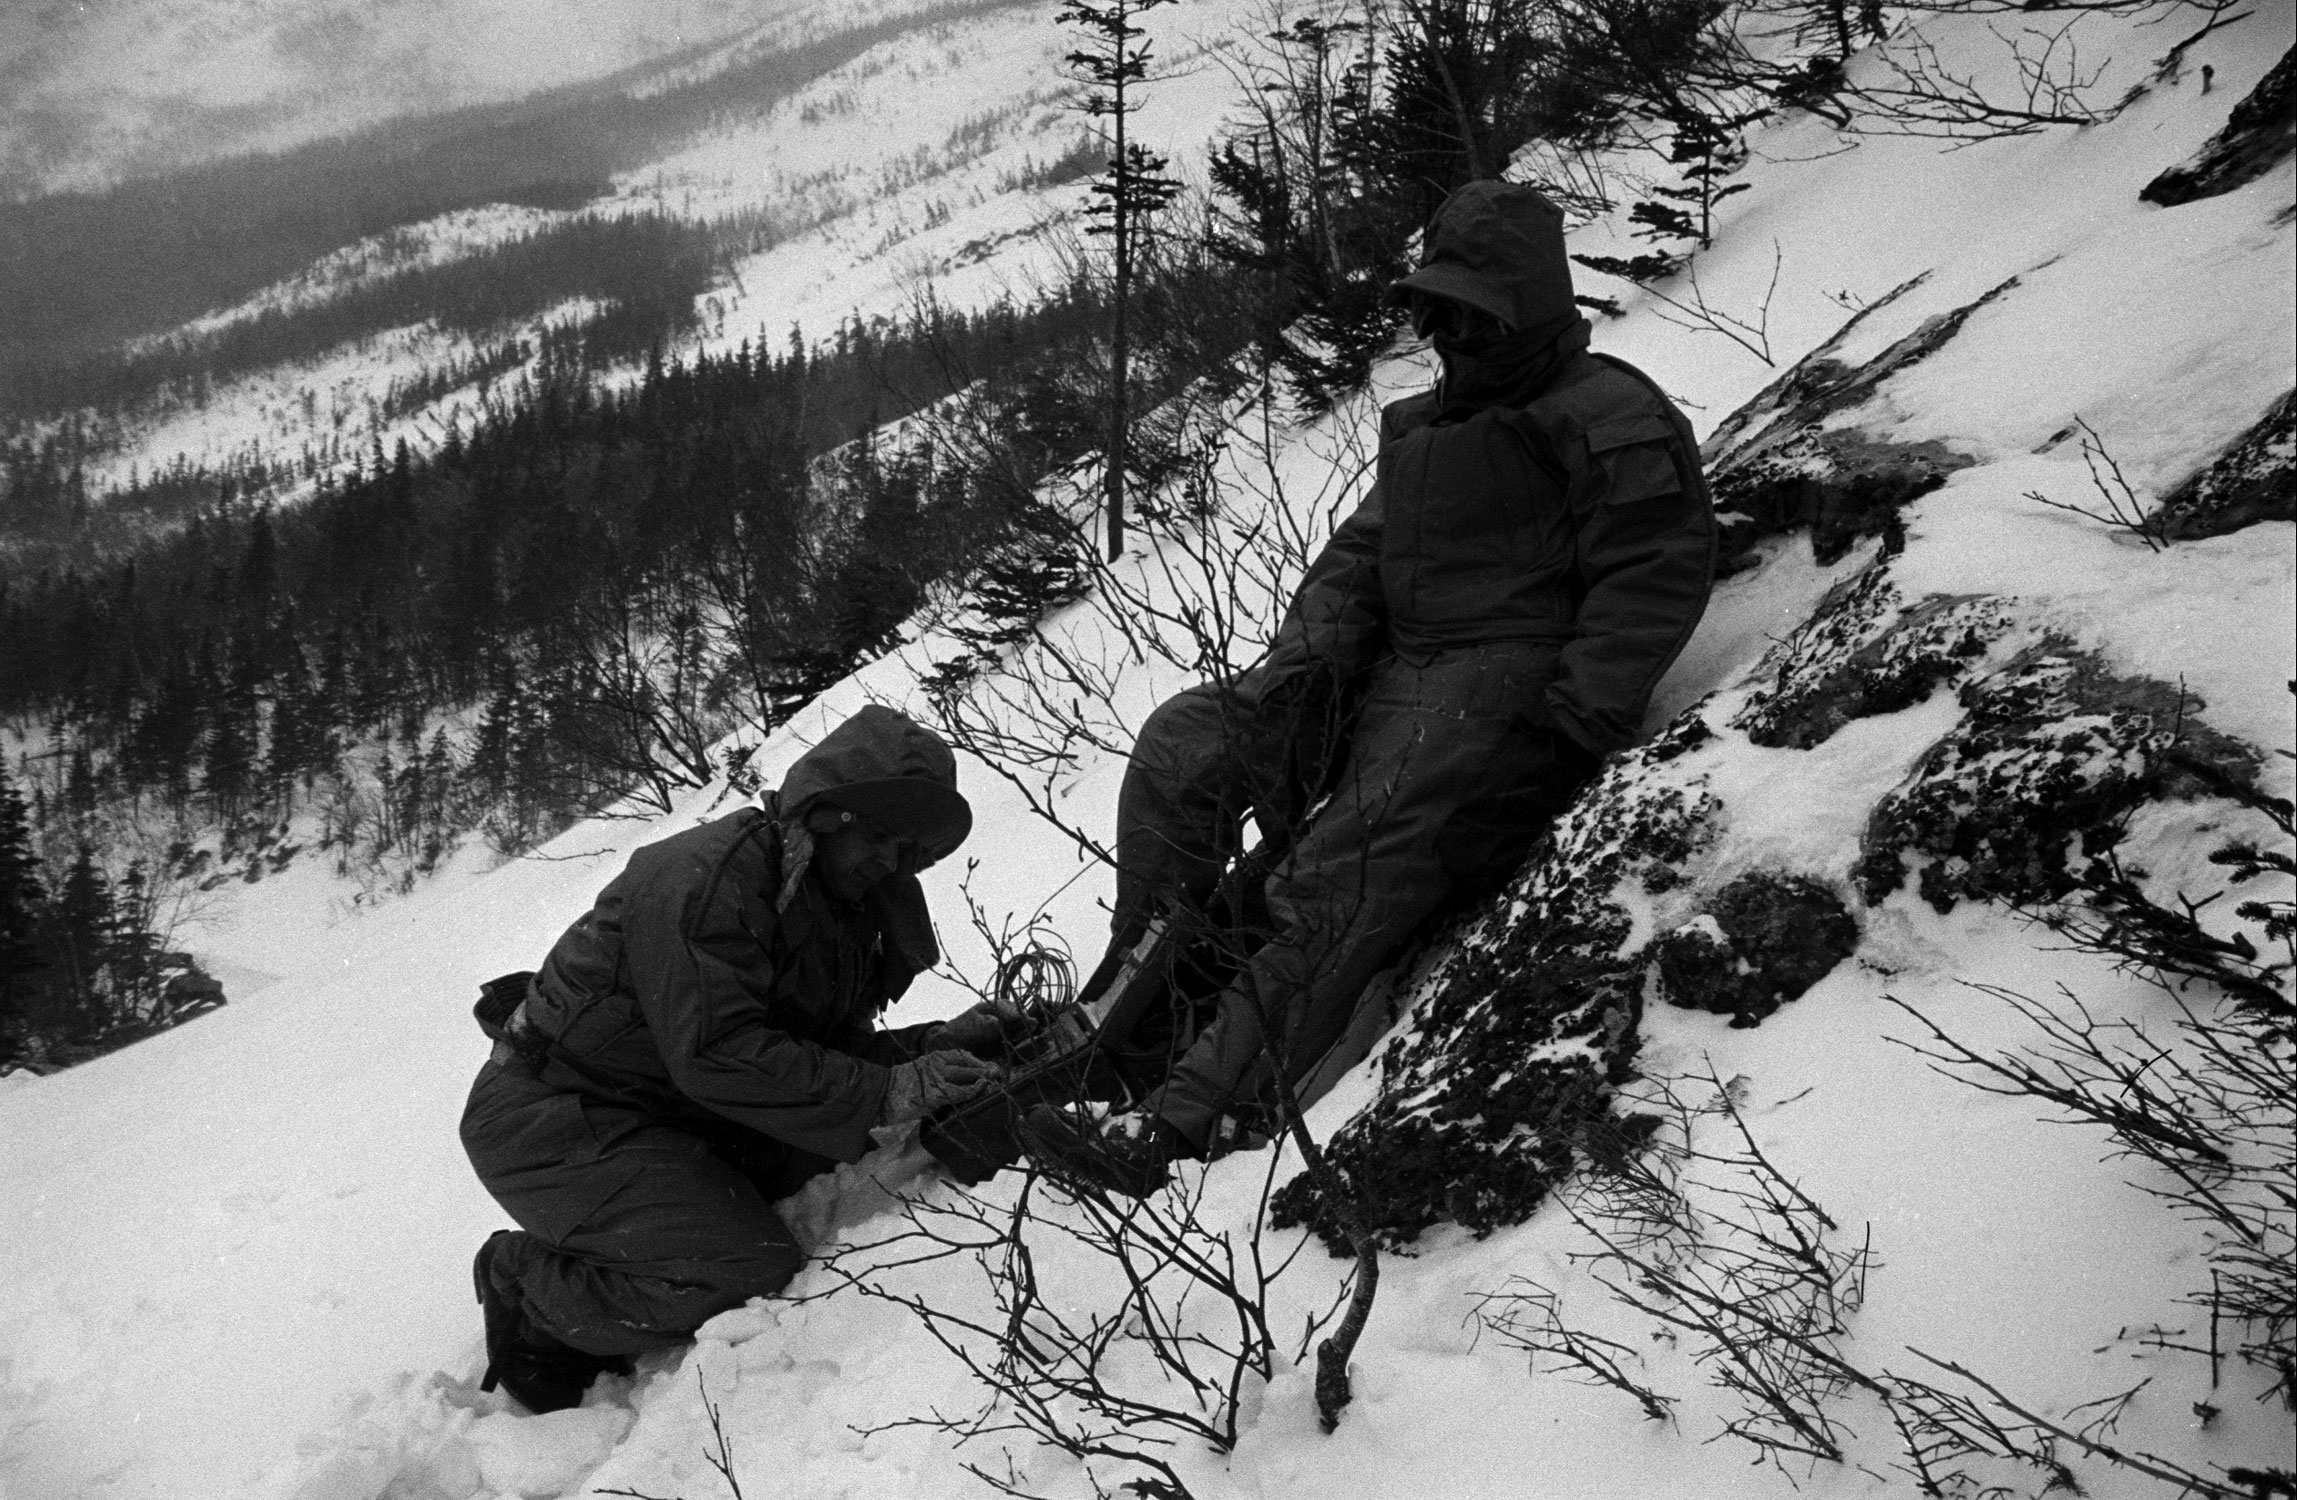 Military survival test, New Hampshire's Mount Washington, 1953.